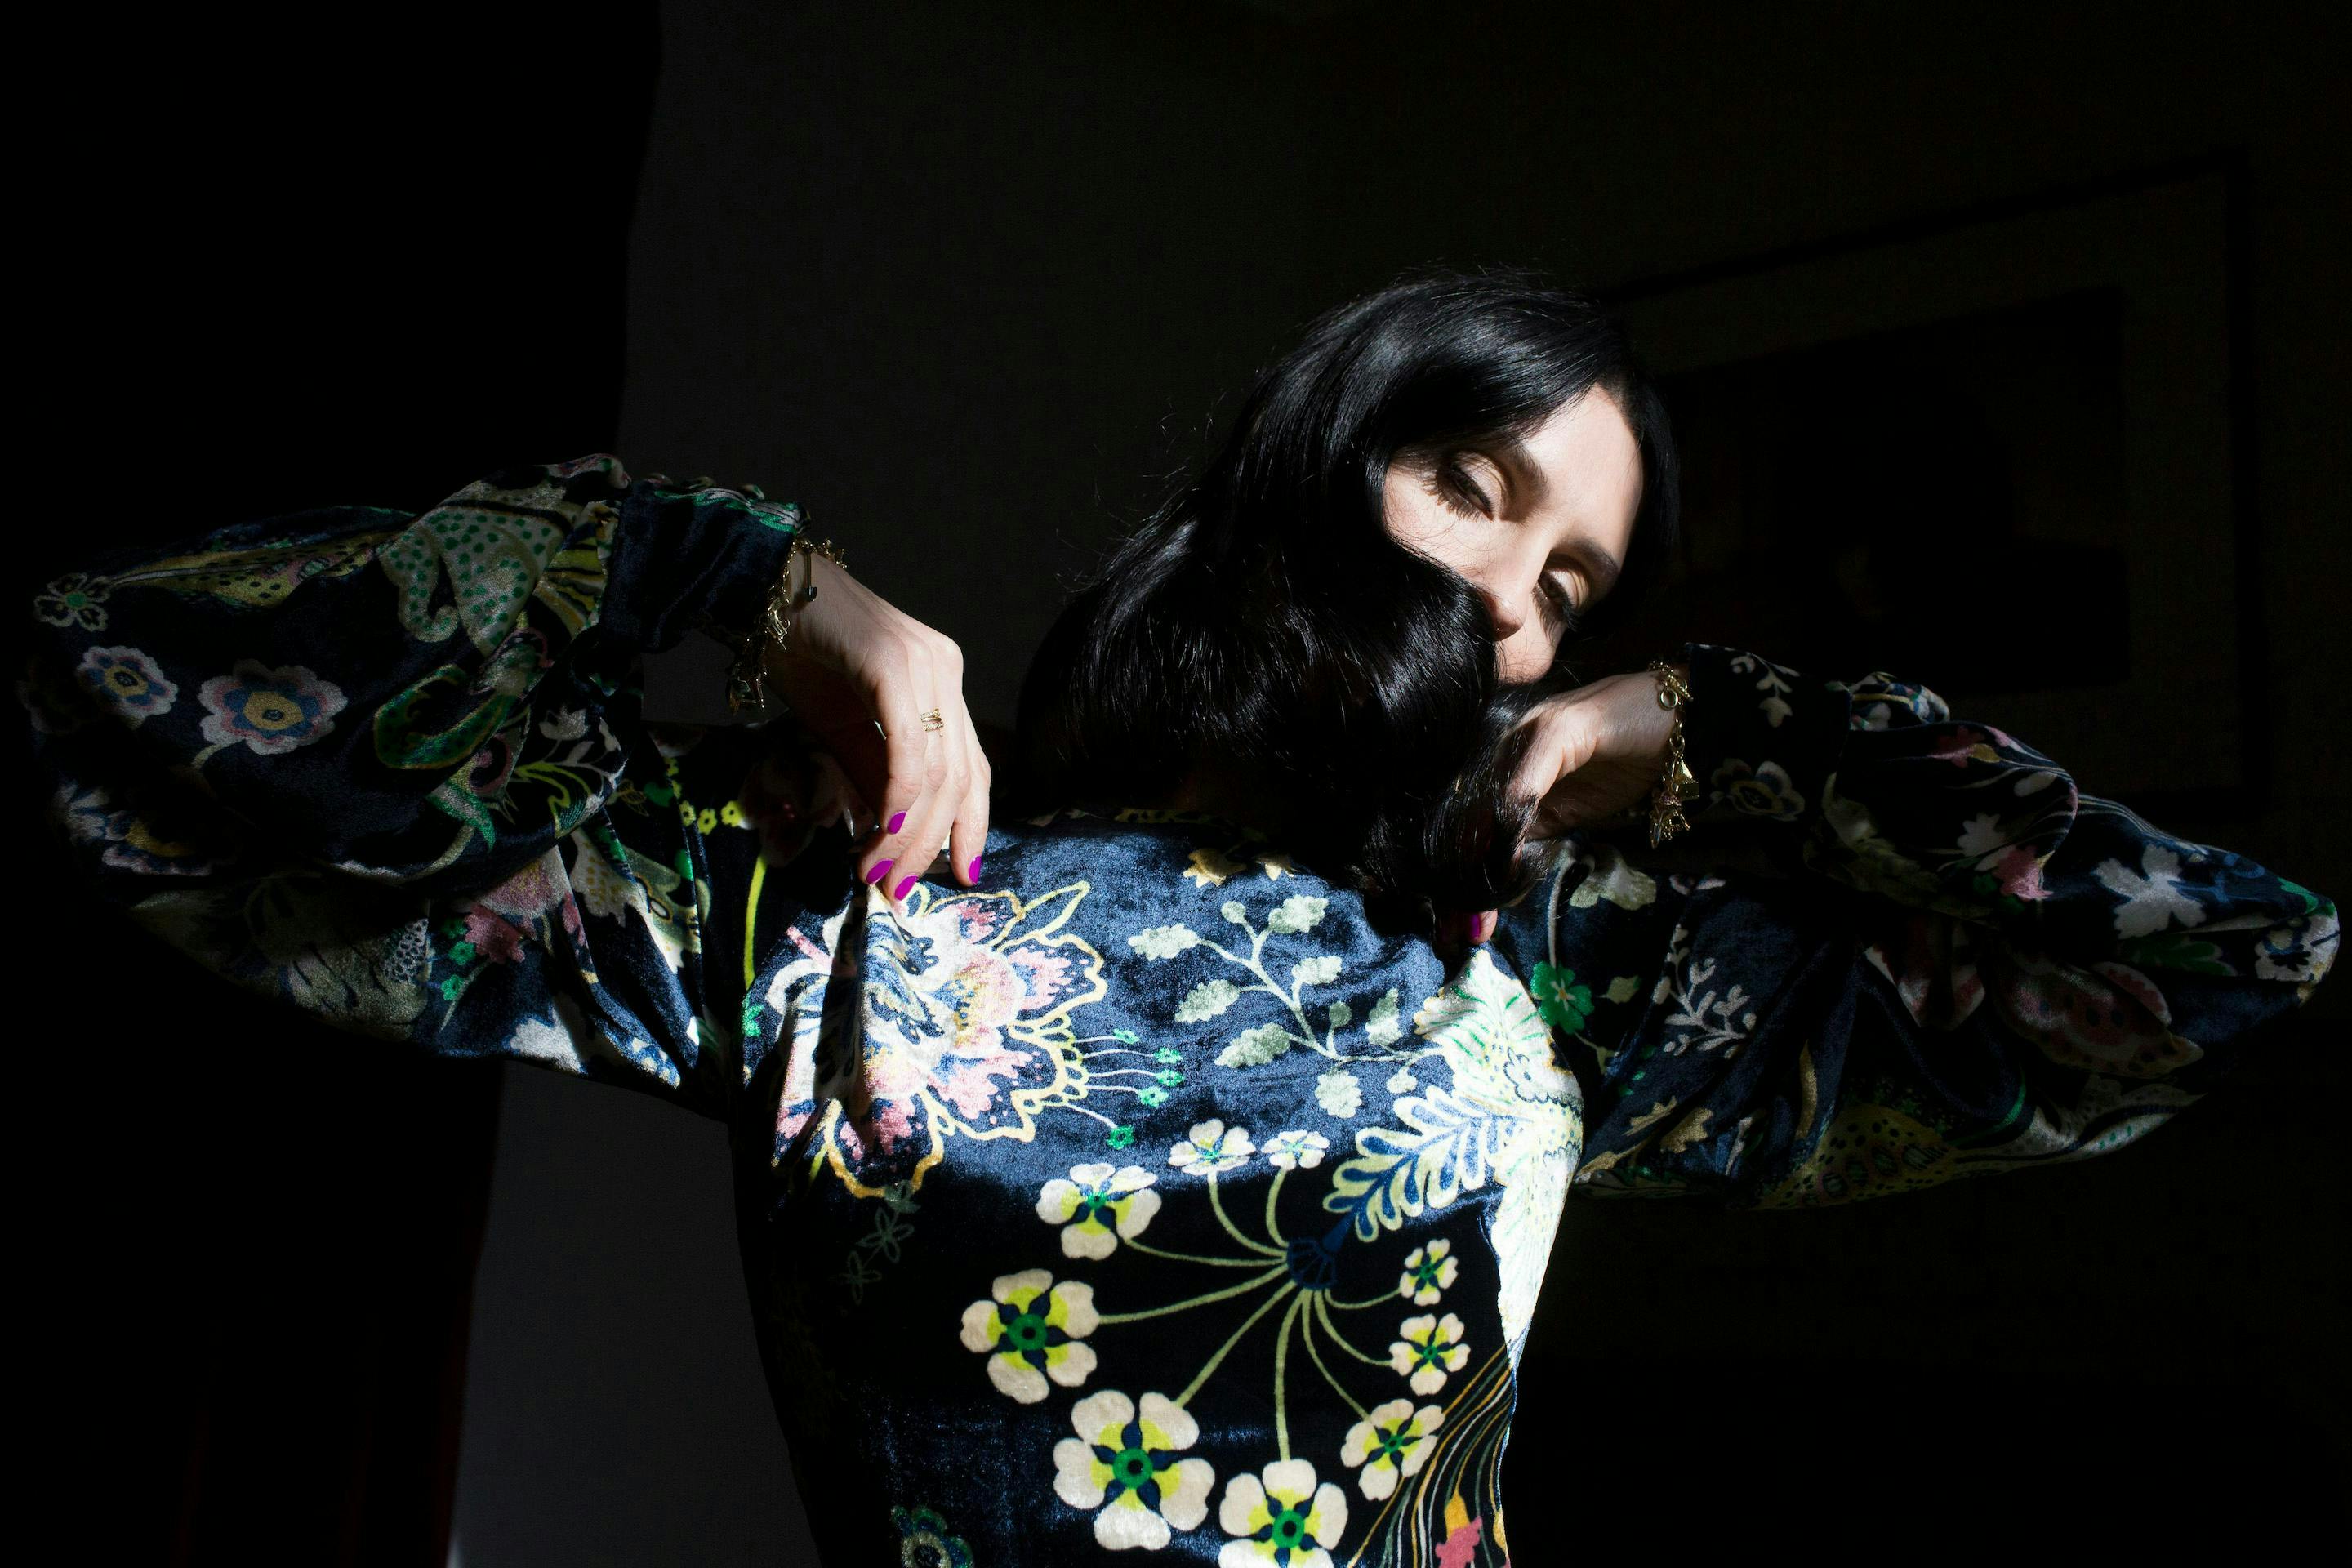 london clothing apparel robe fashion gown evening dress kimono person human